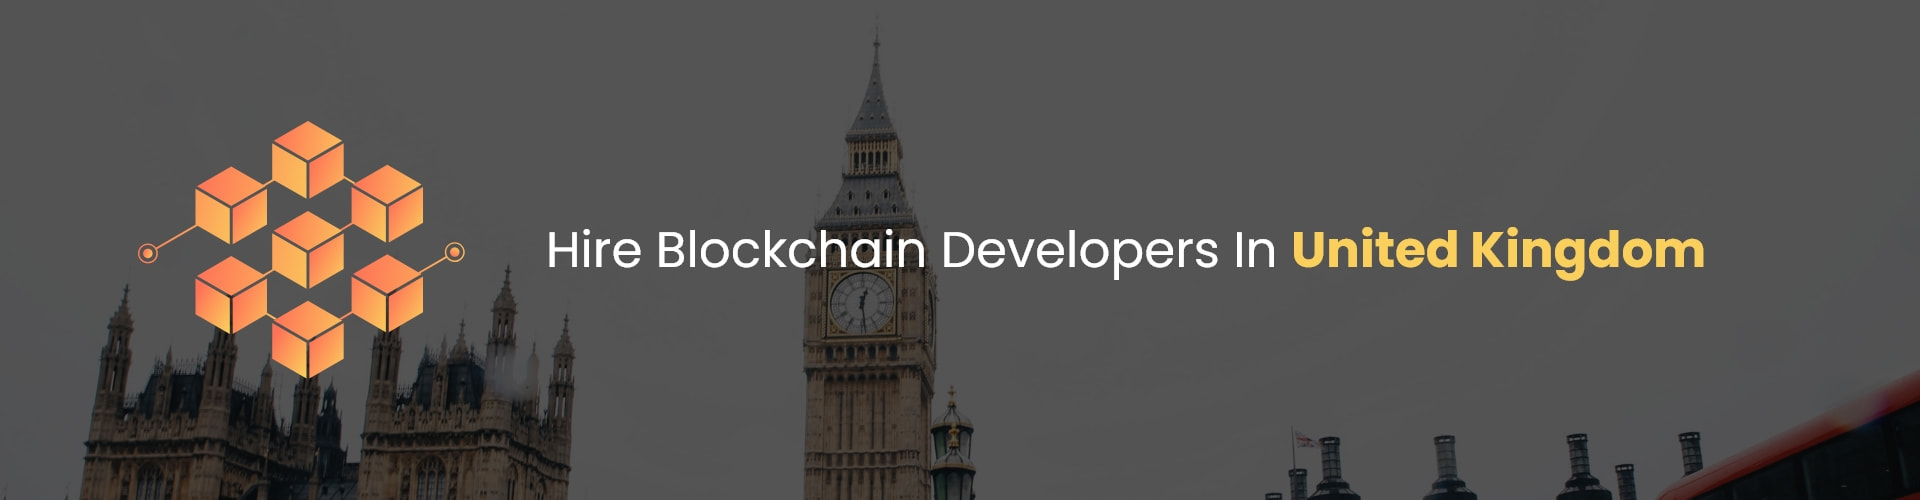 hire blockchain developers in united kingdom